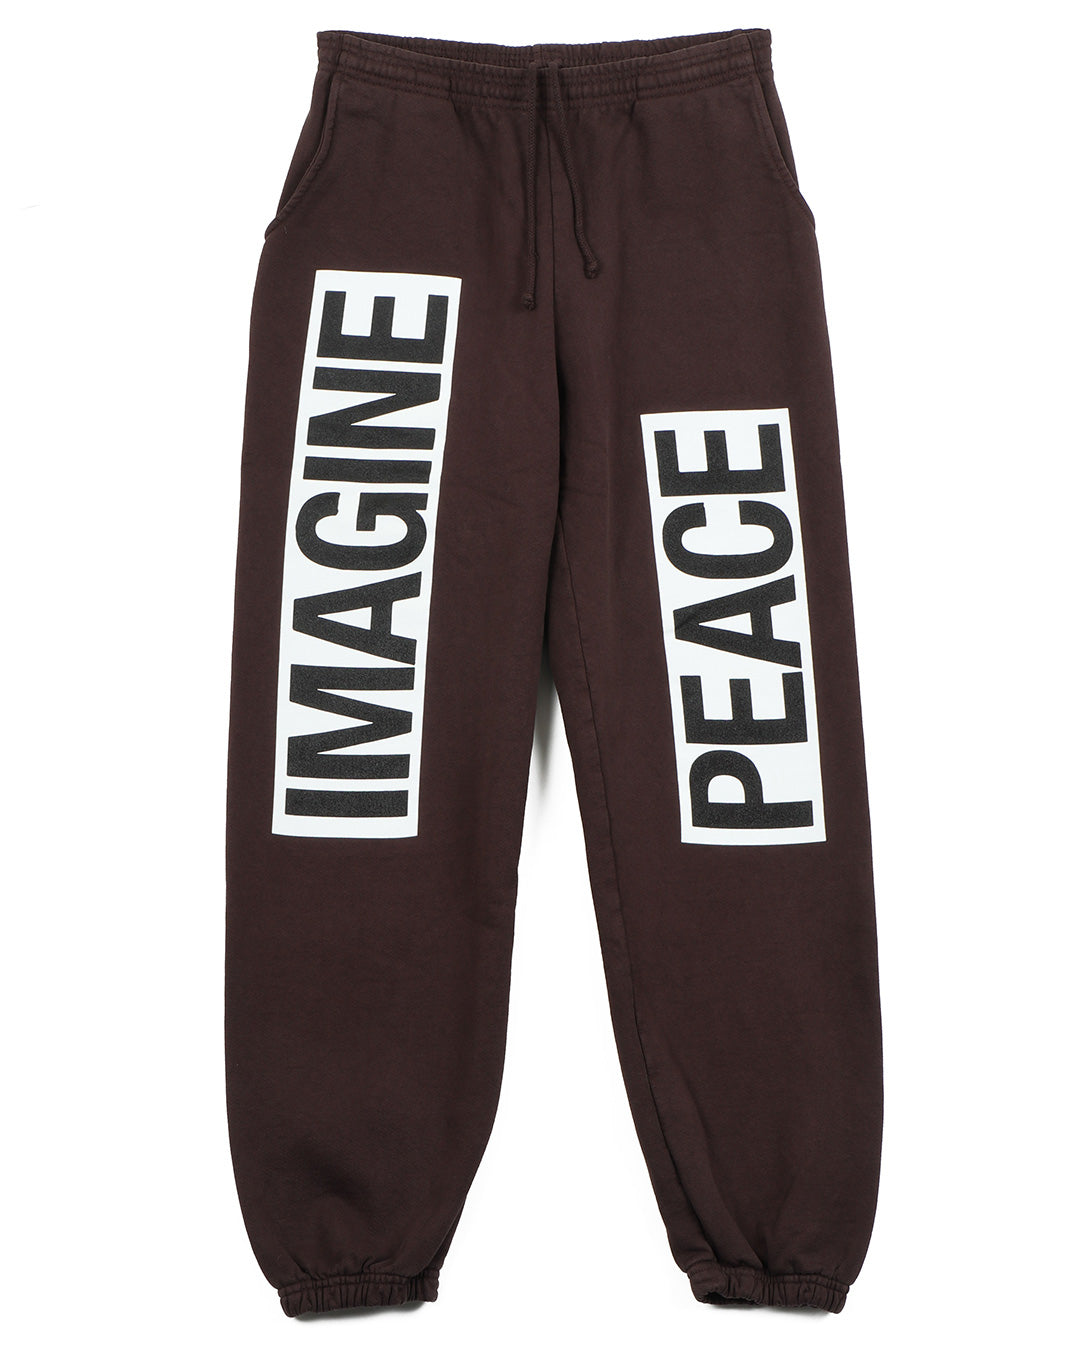 Imagine Peace Sweat Pants